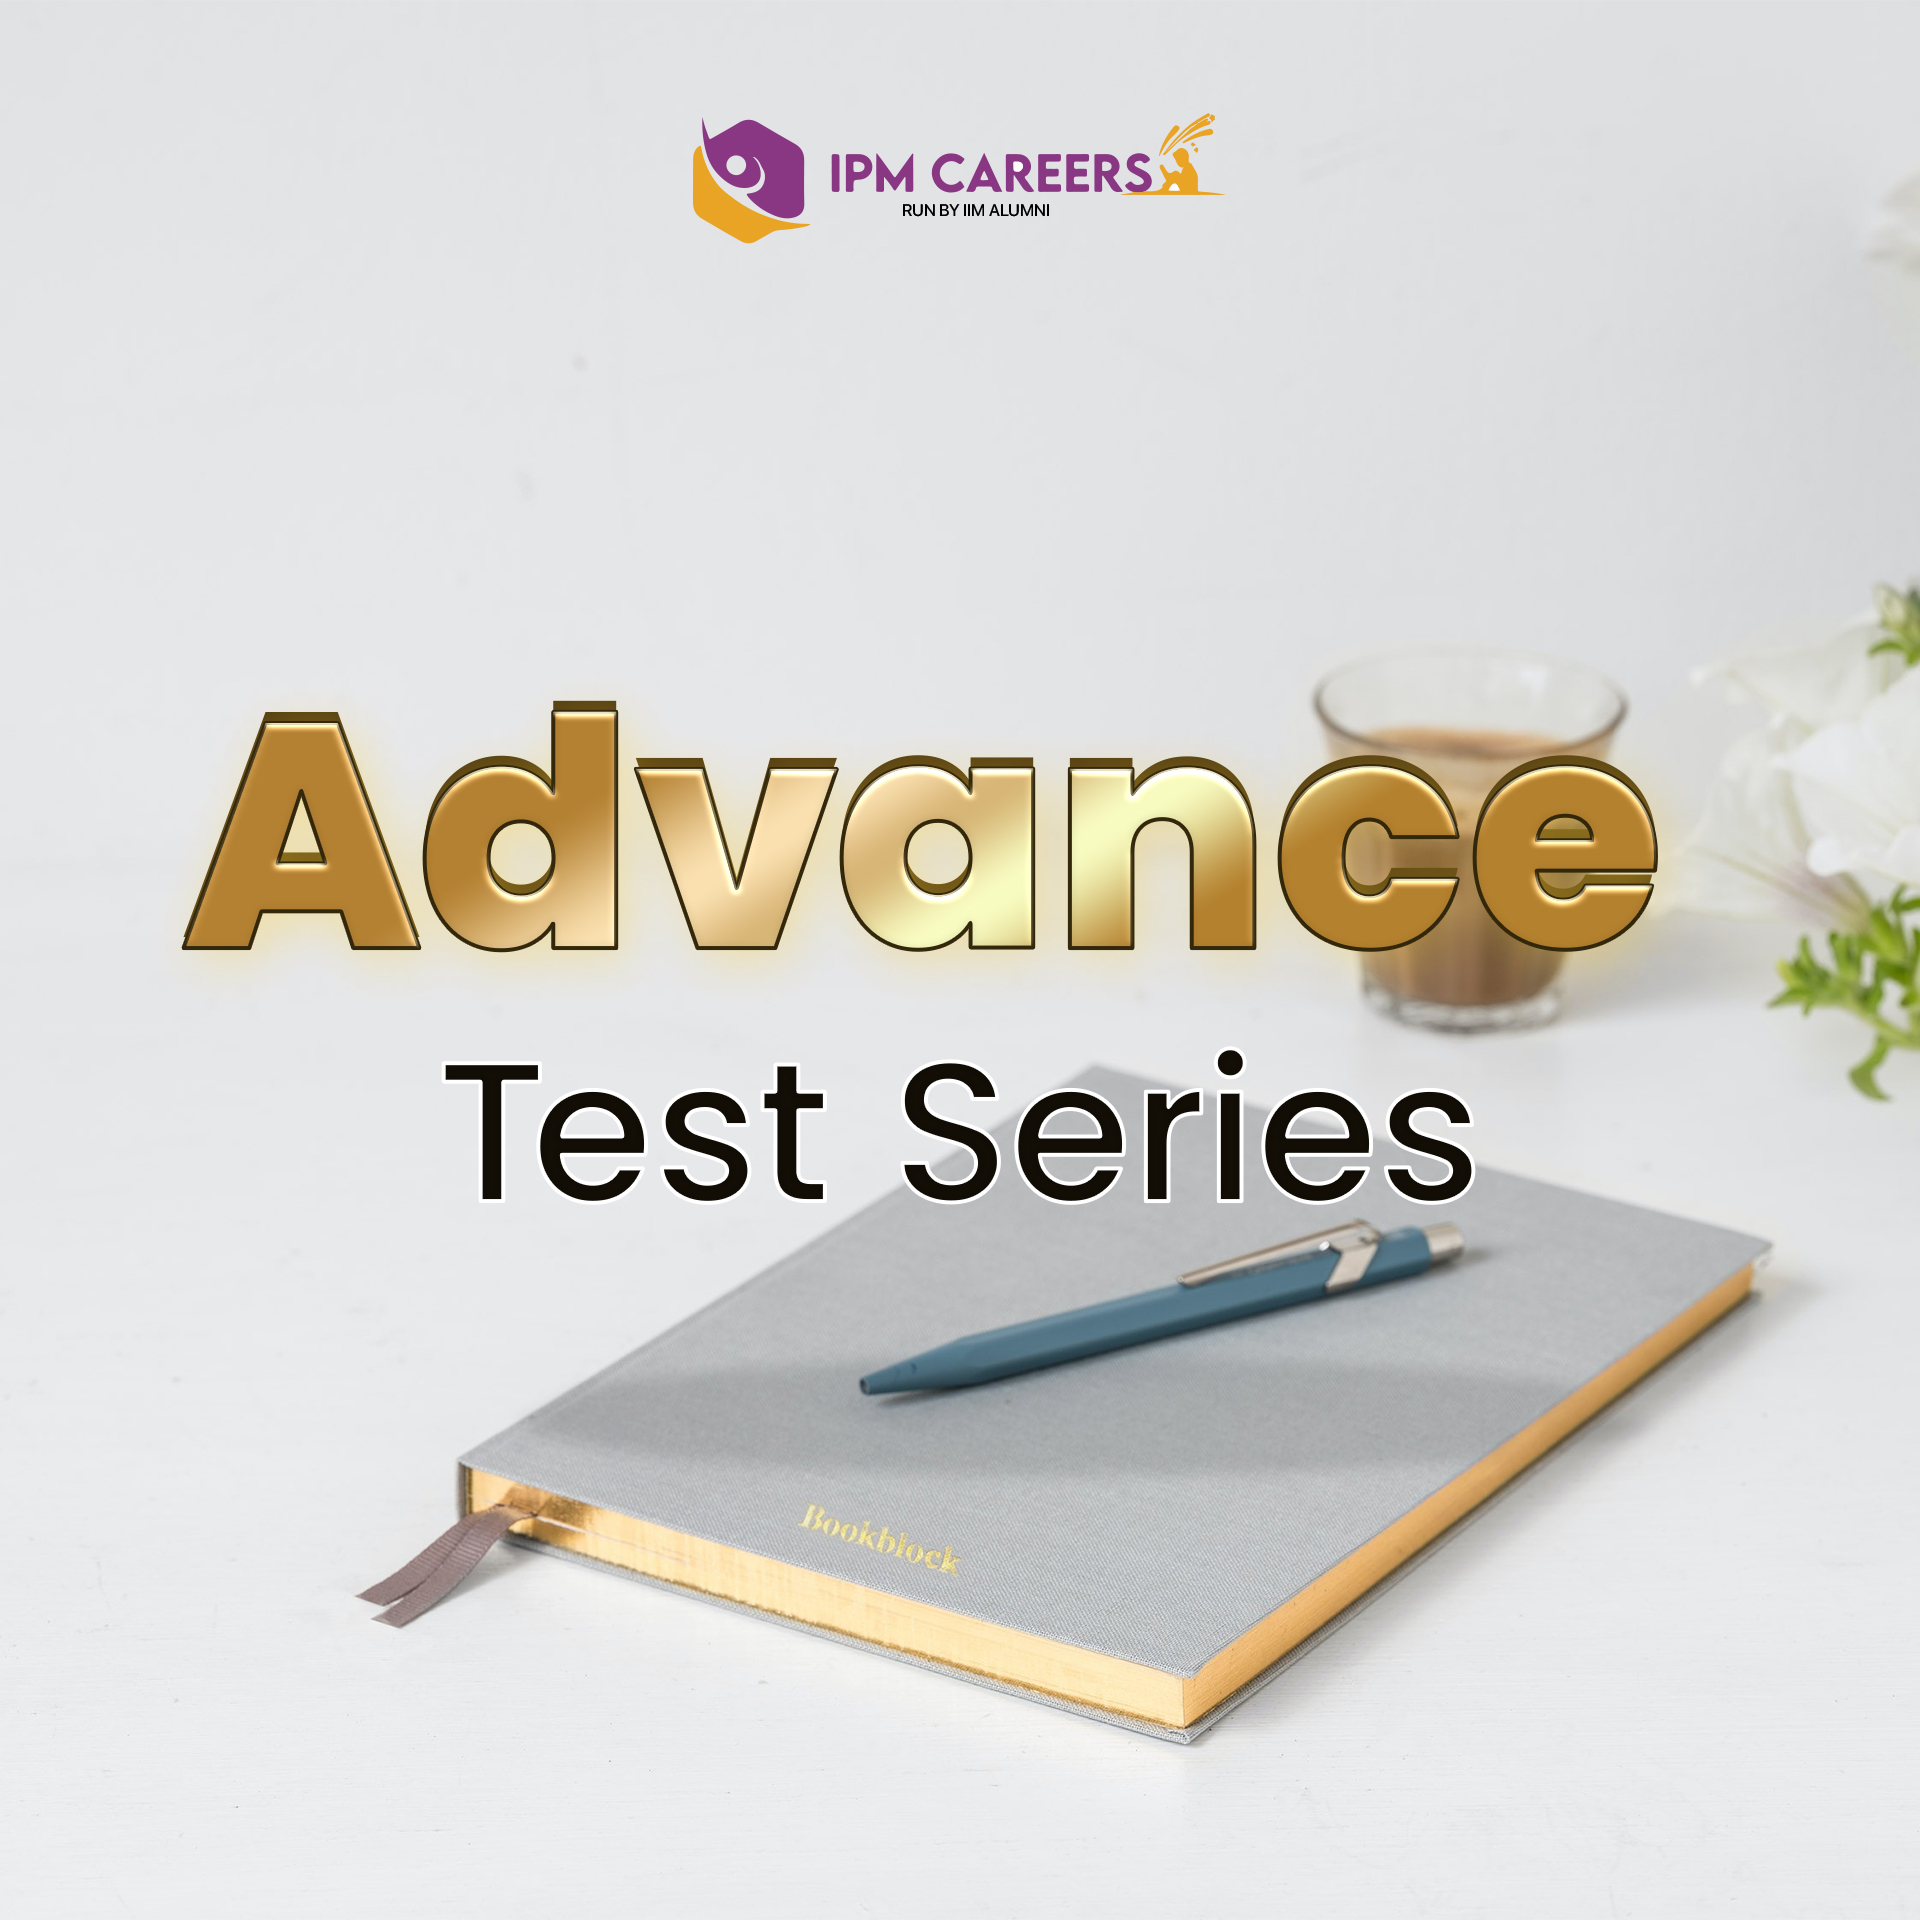 davance Test series